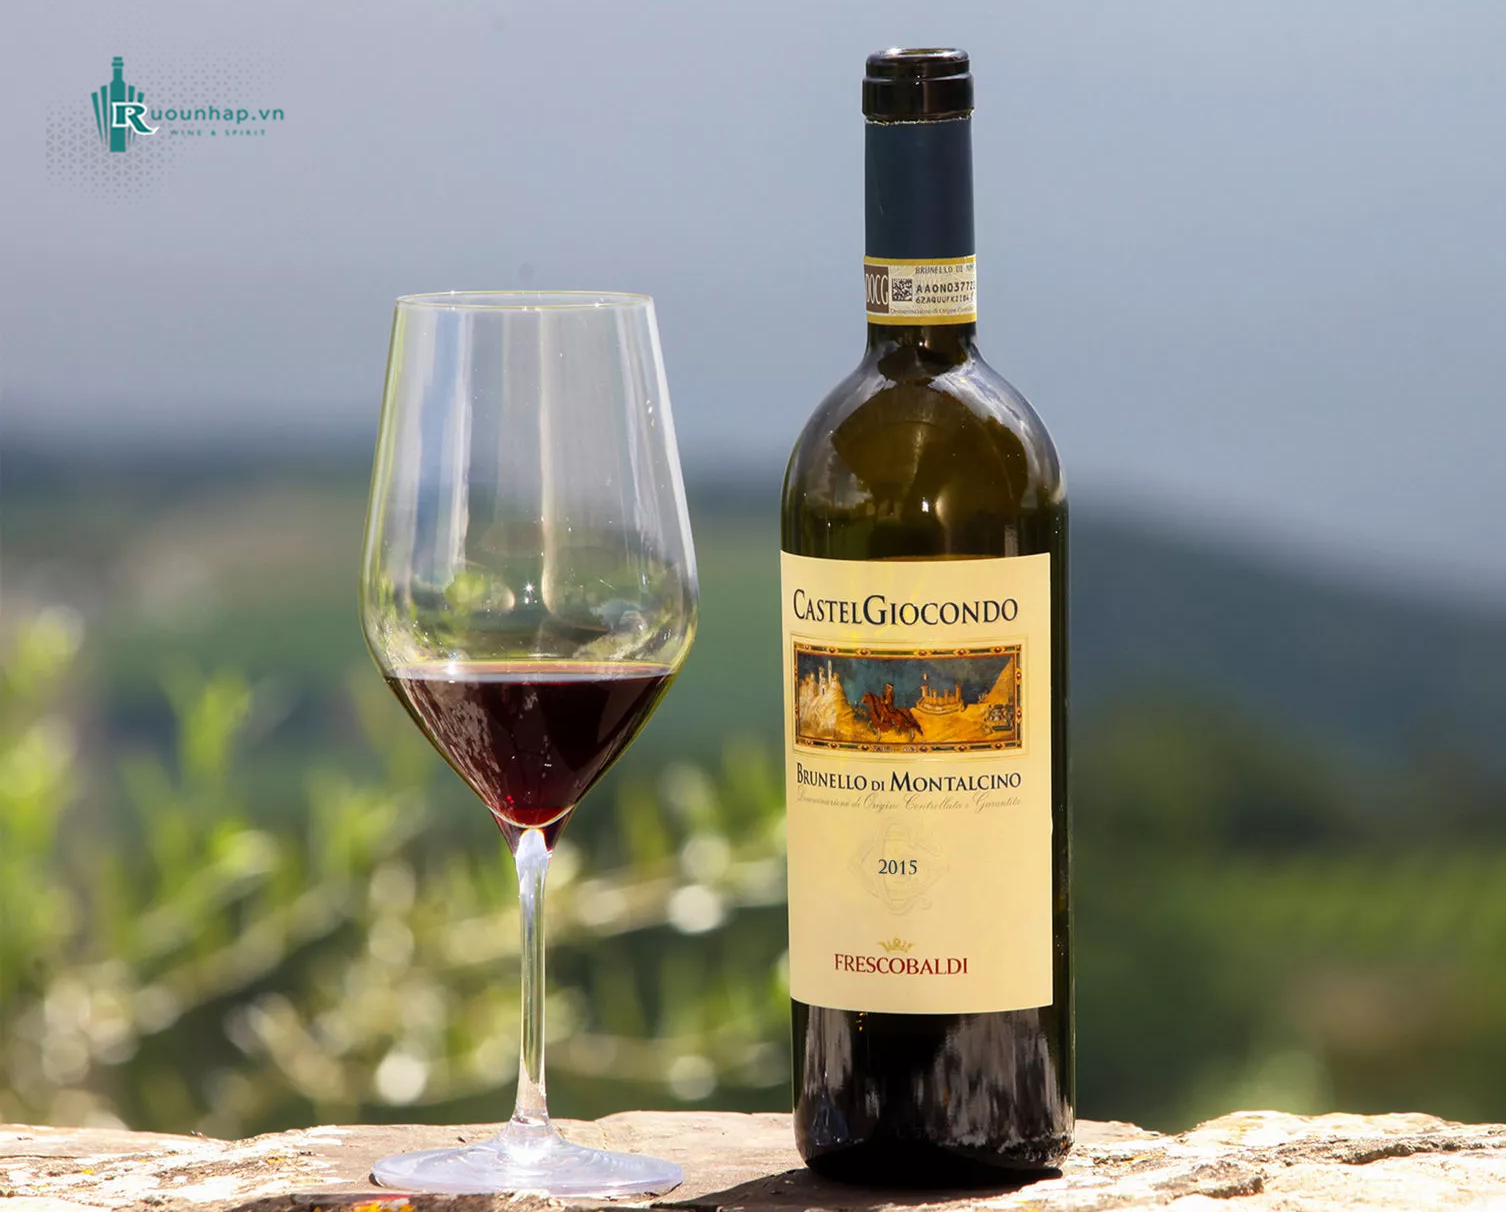 Rượu Vang Castelgiocondo Brunello Di Montalcino